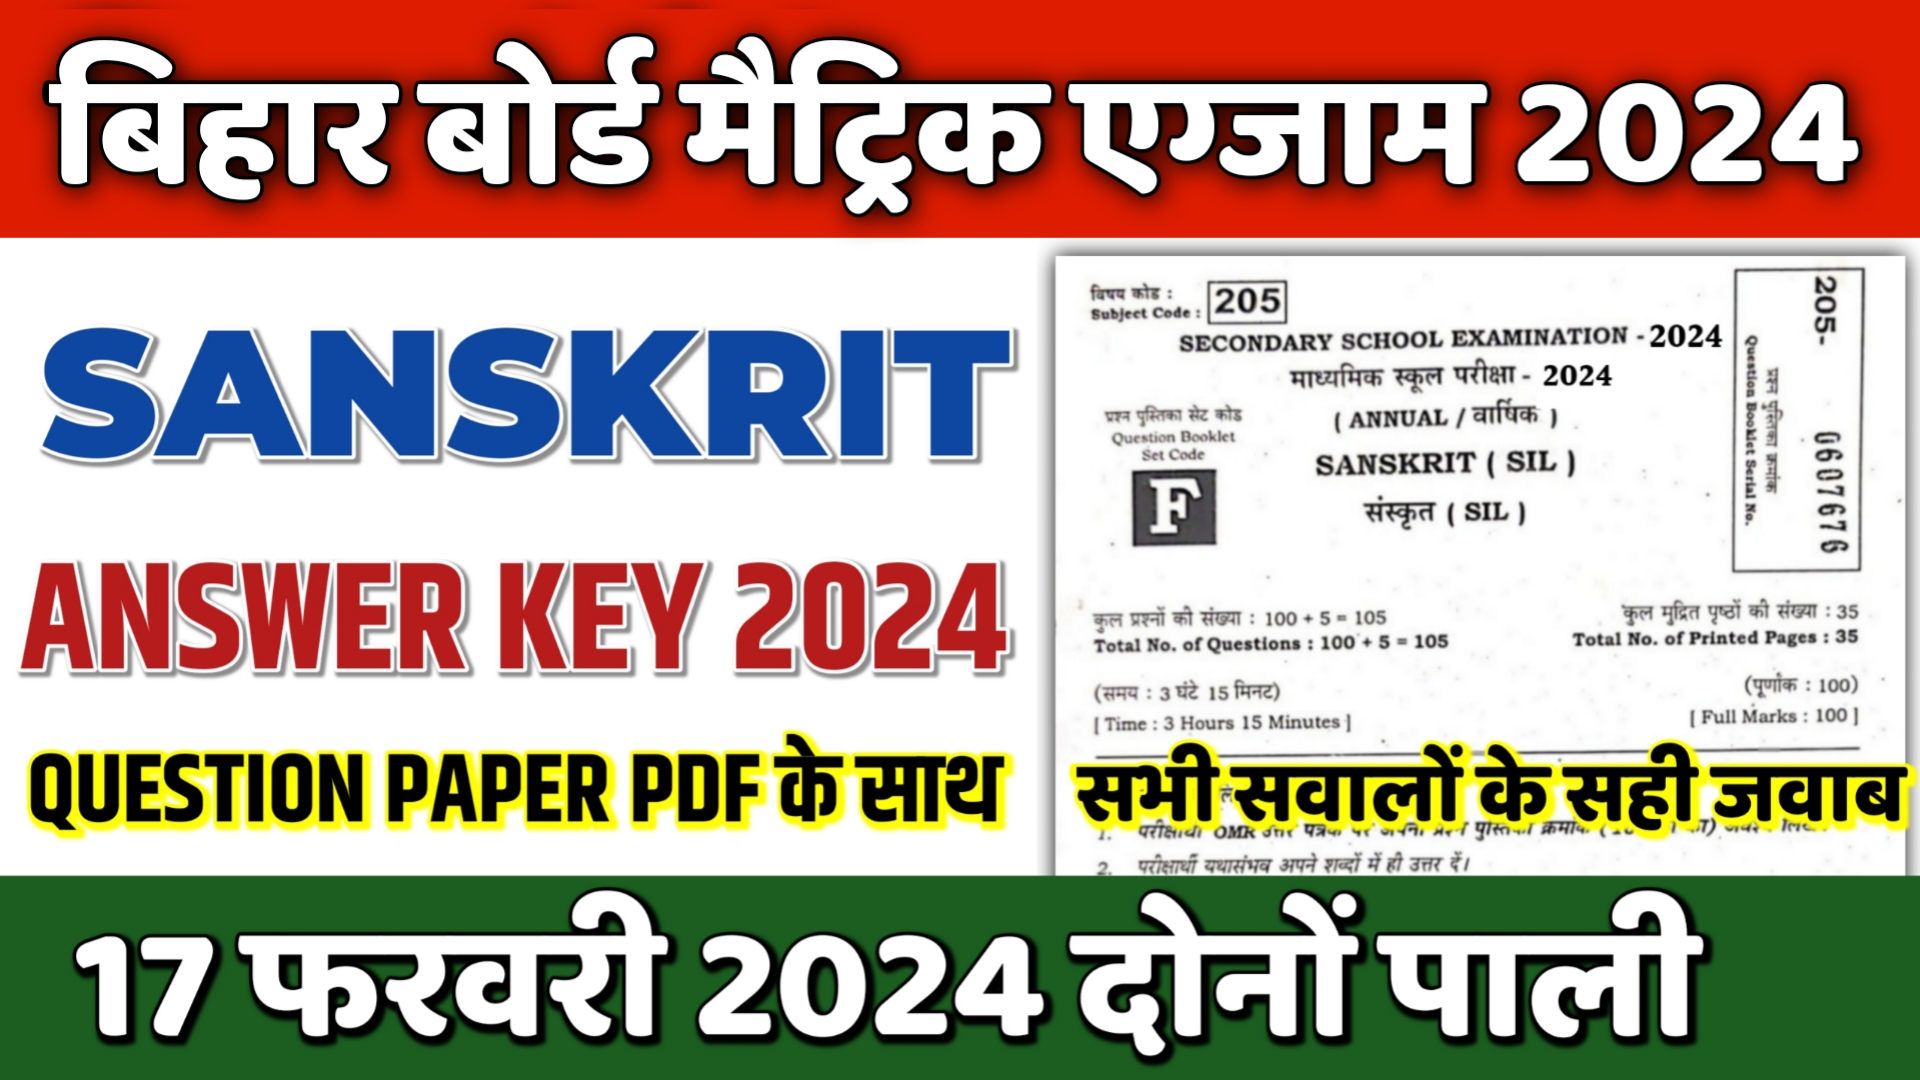 bihar board matric 10th Sanskrit answer key 2024 with question paper pdf